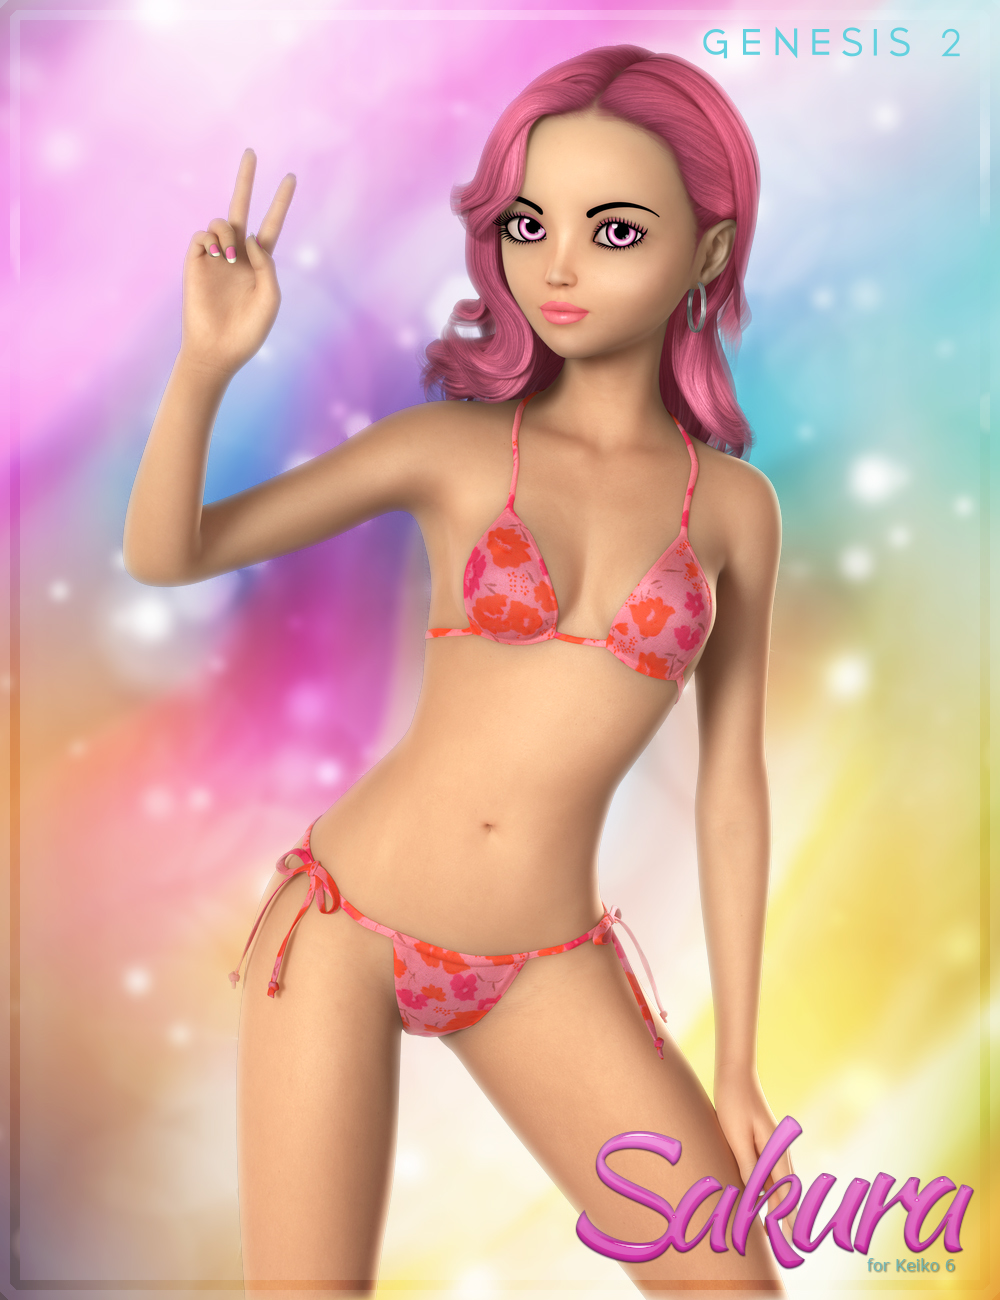 FWF Sakura for Keiko 6 by: Fred Winkler ArtFisty & Darc, 3D Models by Daz 3D